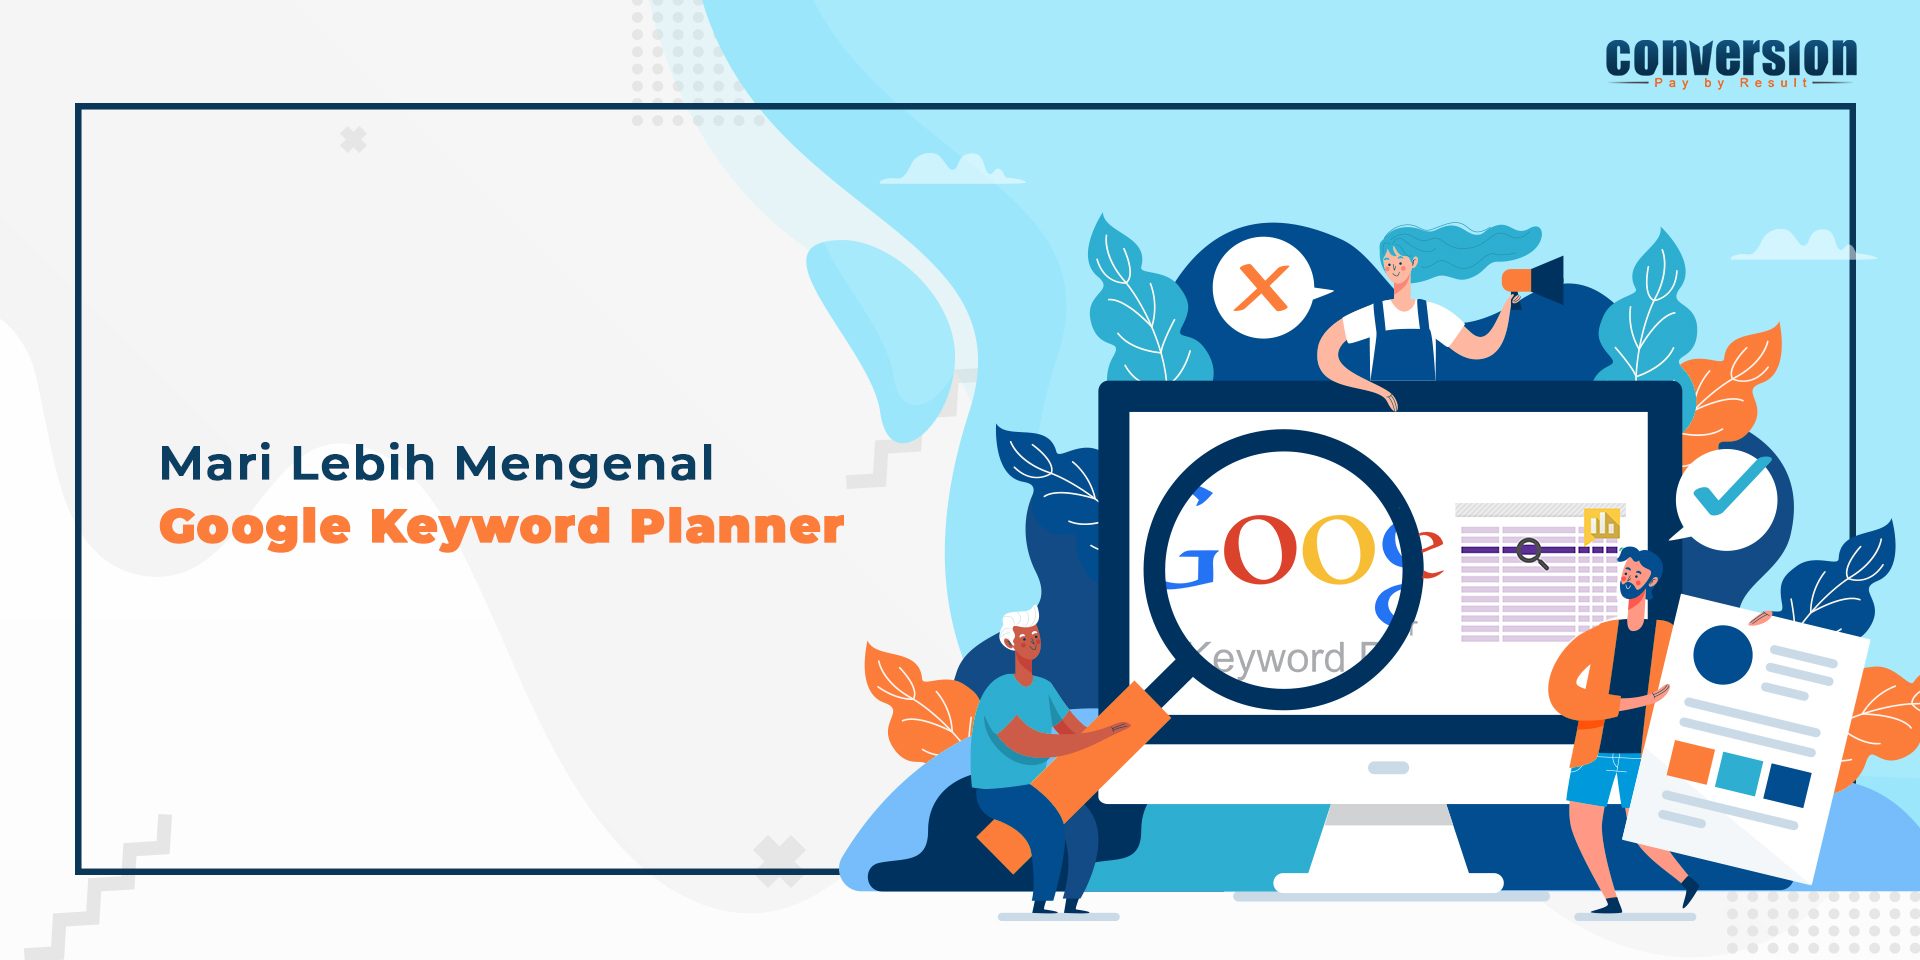 Mari Lebih Mengenal Google Keyword Planner!